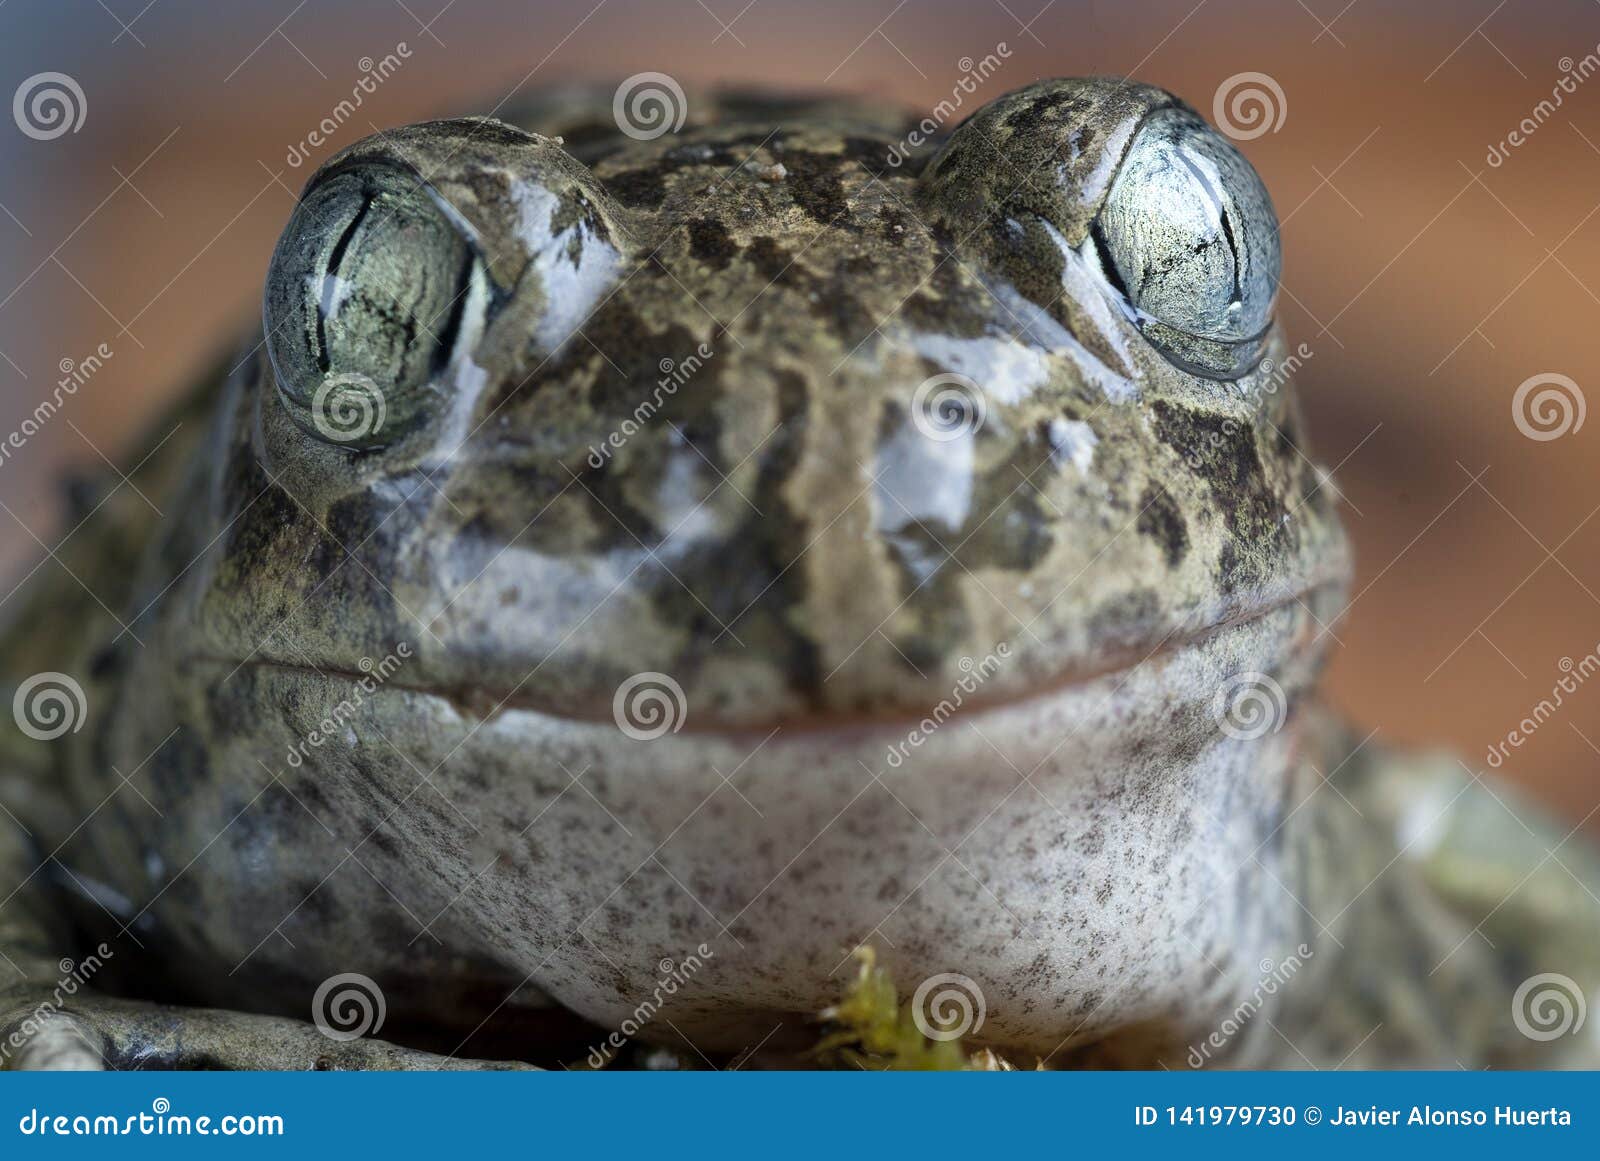 spadefoot toad, pelobates cultripes, amphibian